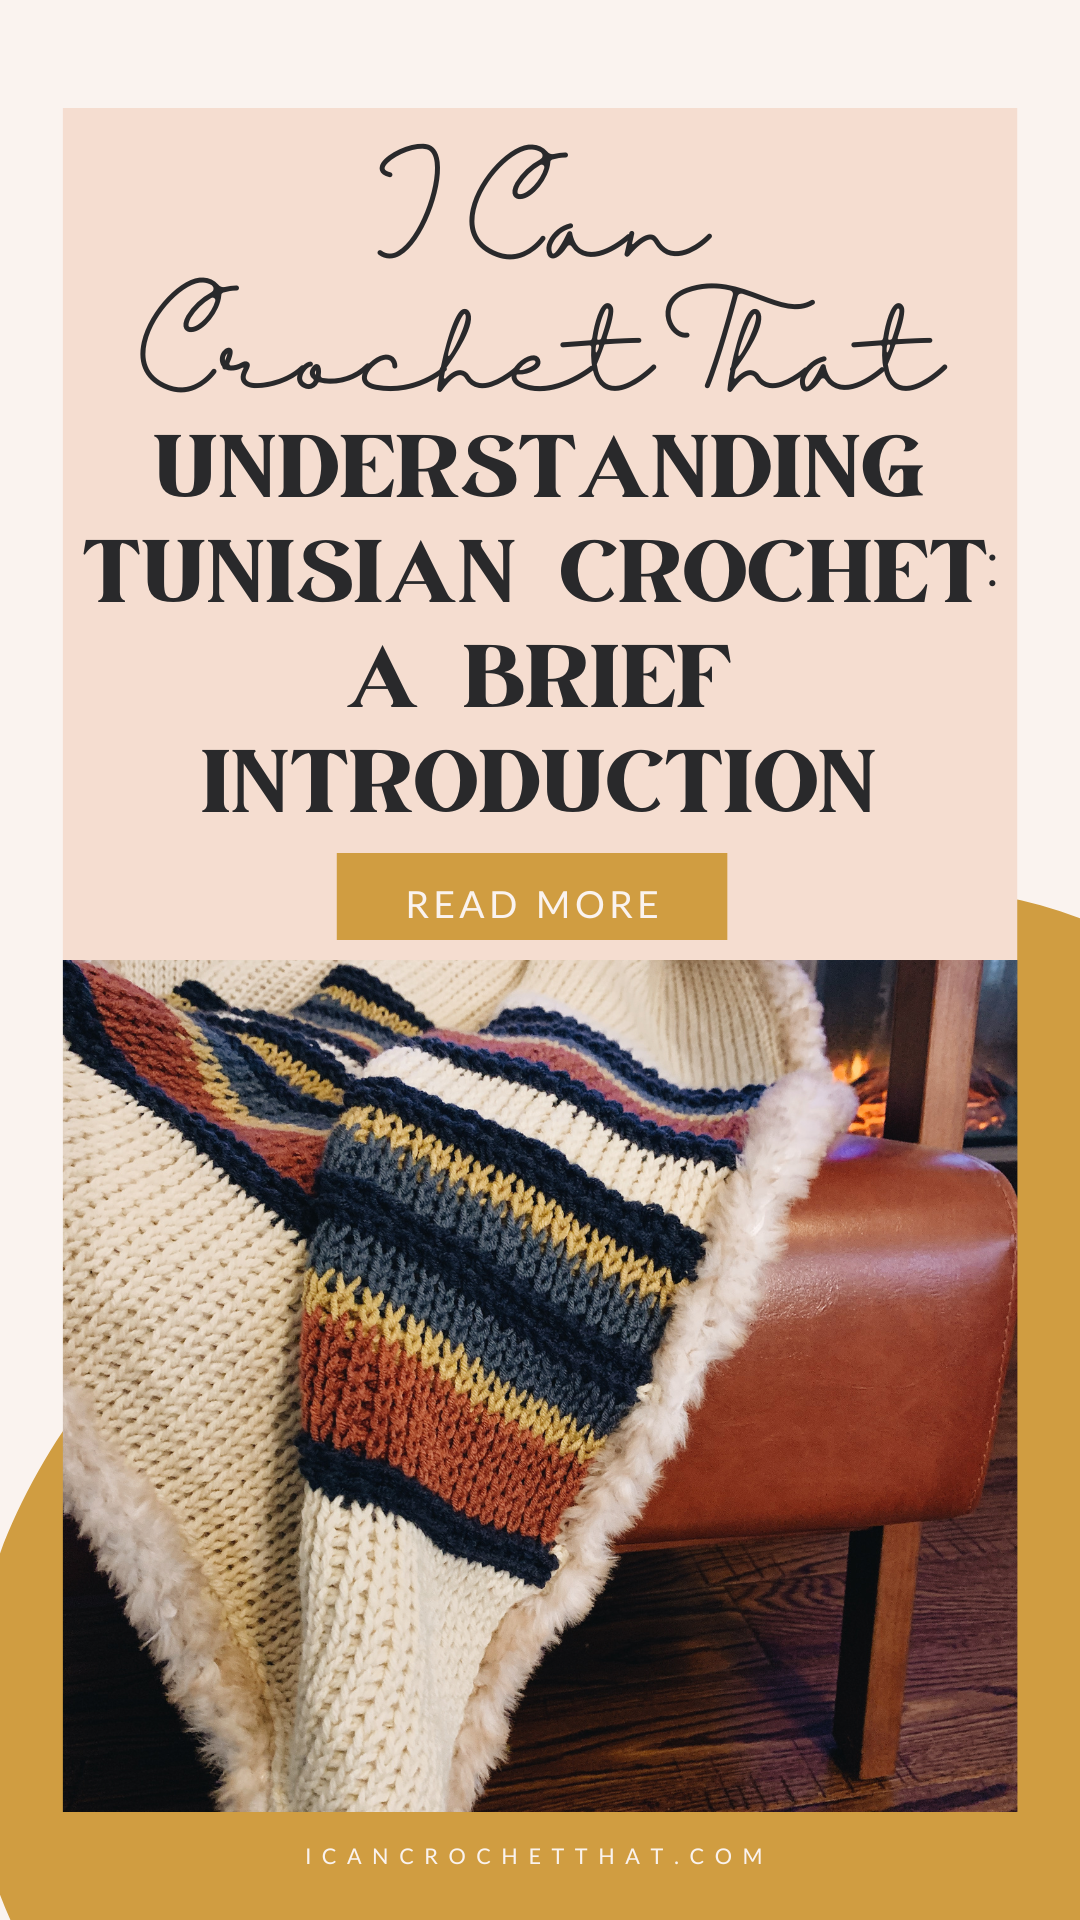 What is Tunisian Crochet?